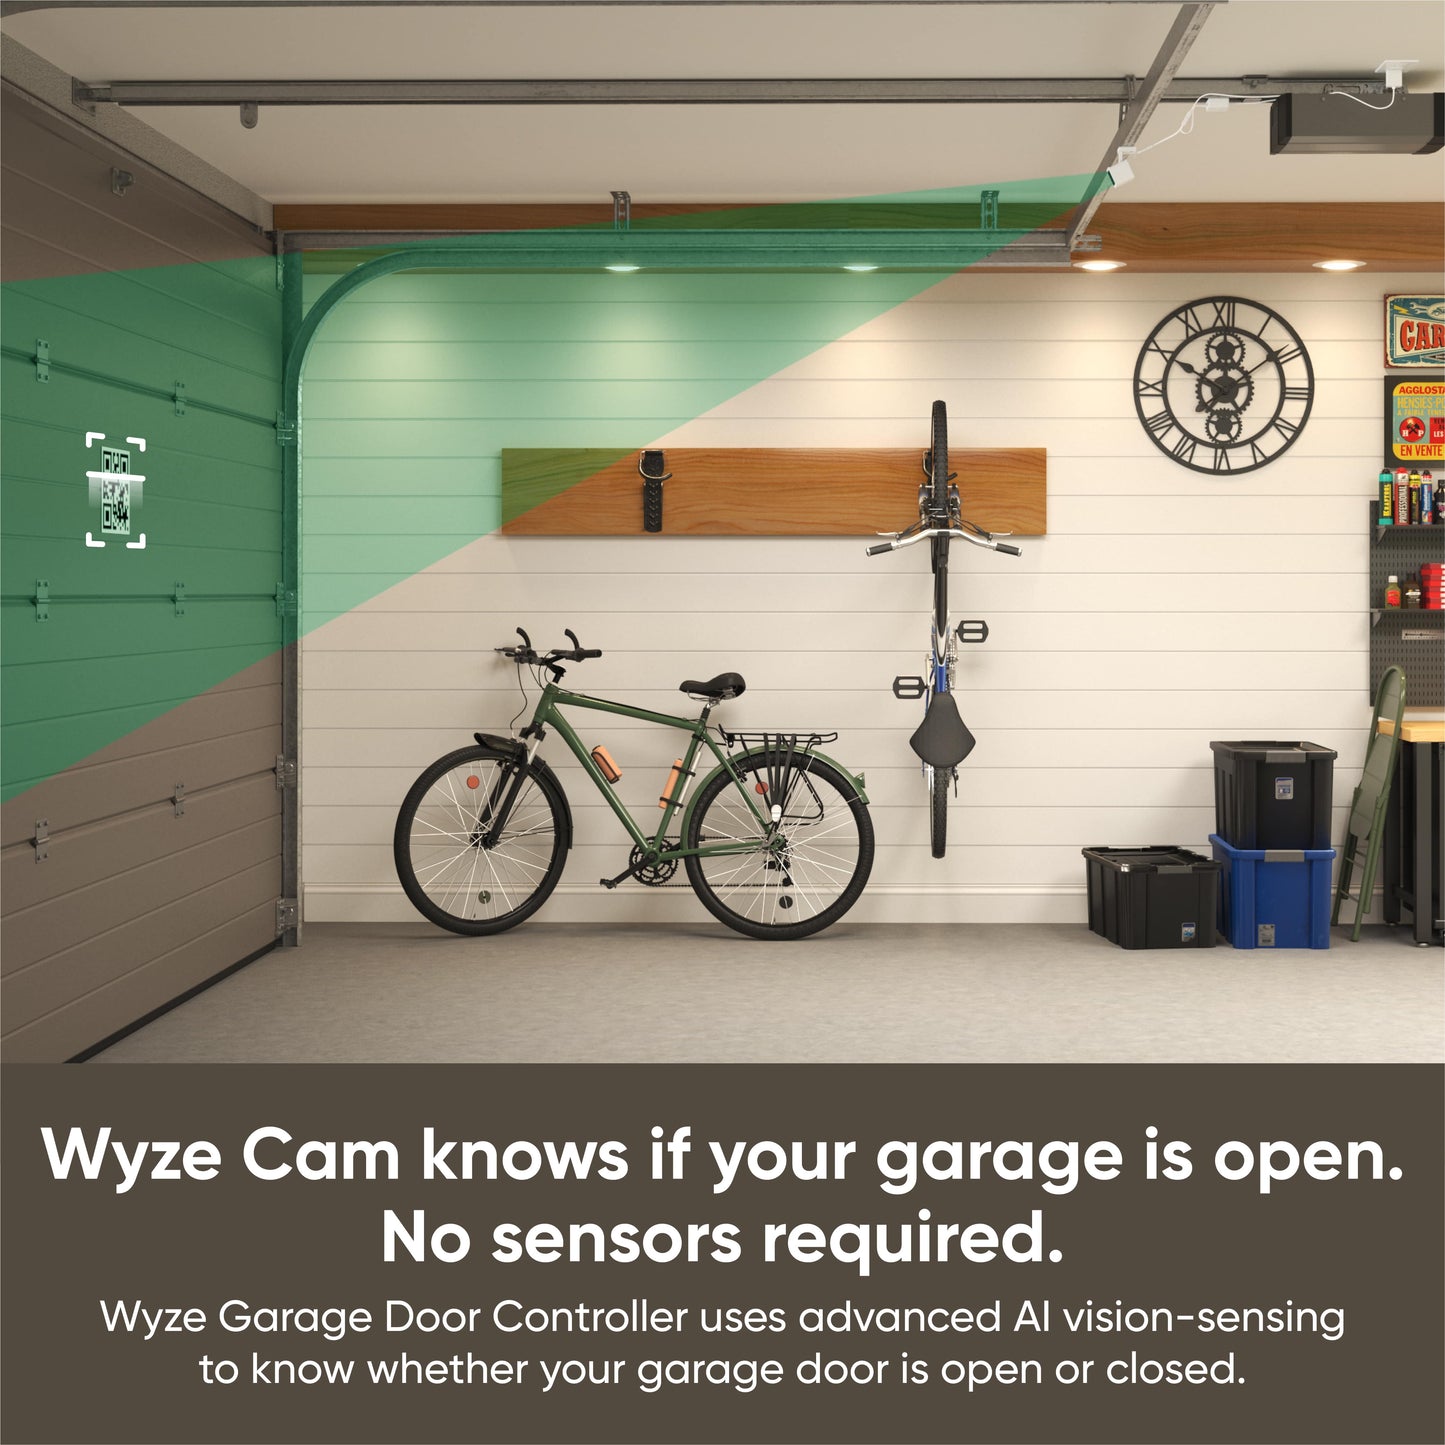 Wyze camera and garage controller installed to detect if garage door is open.